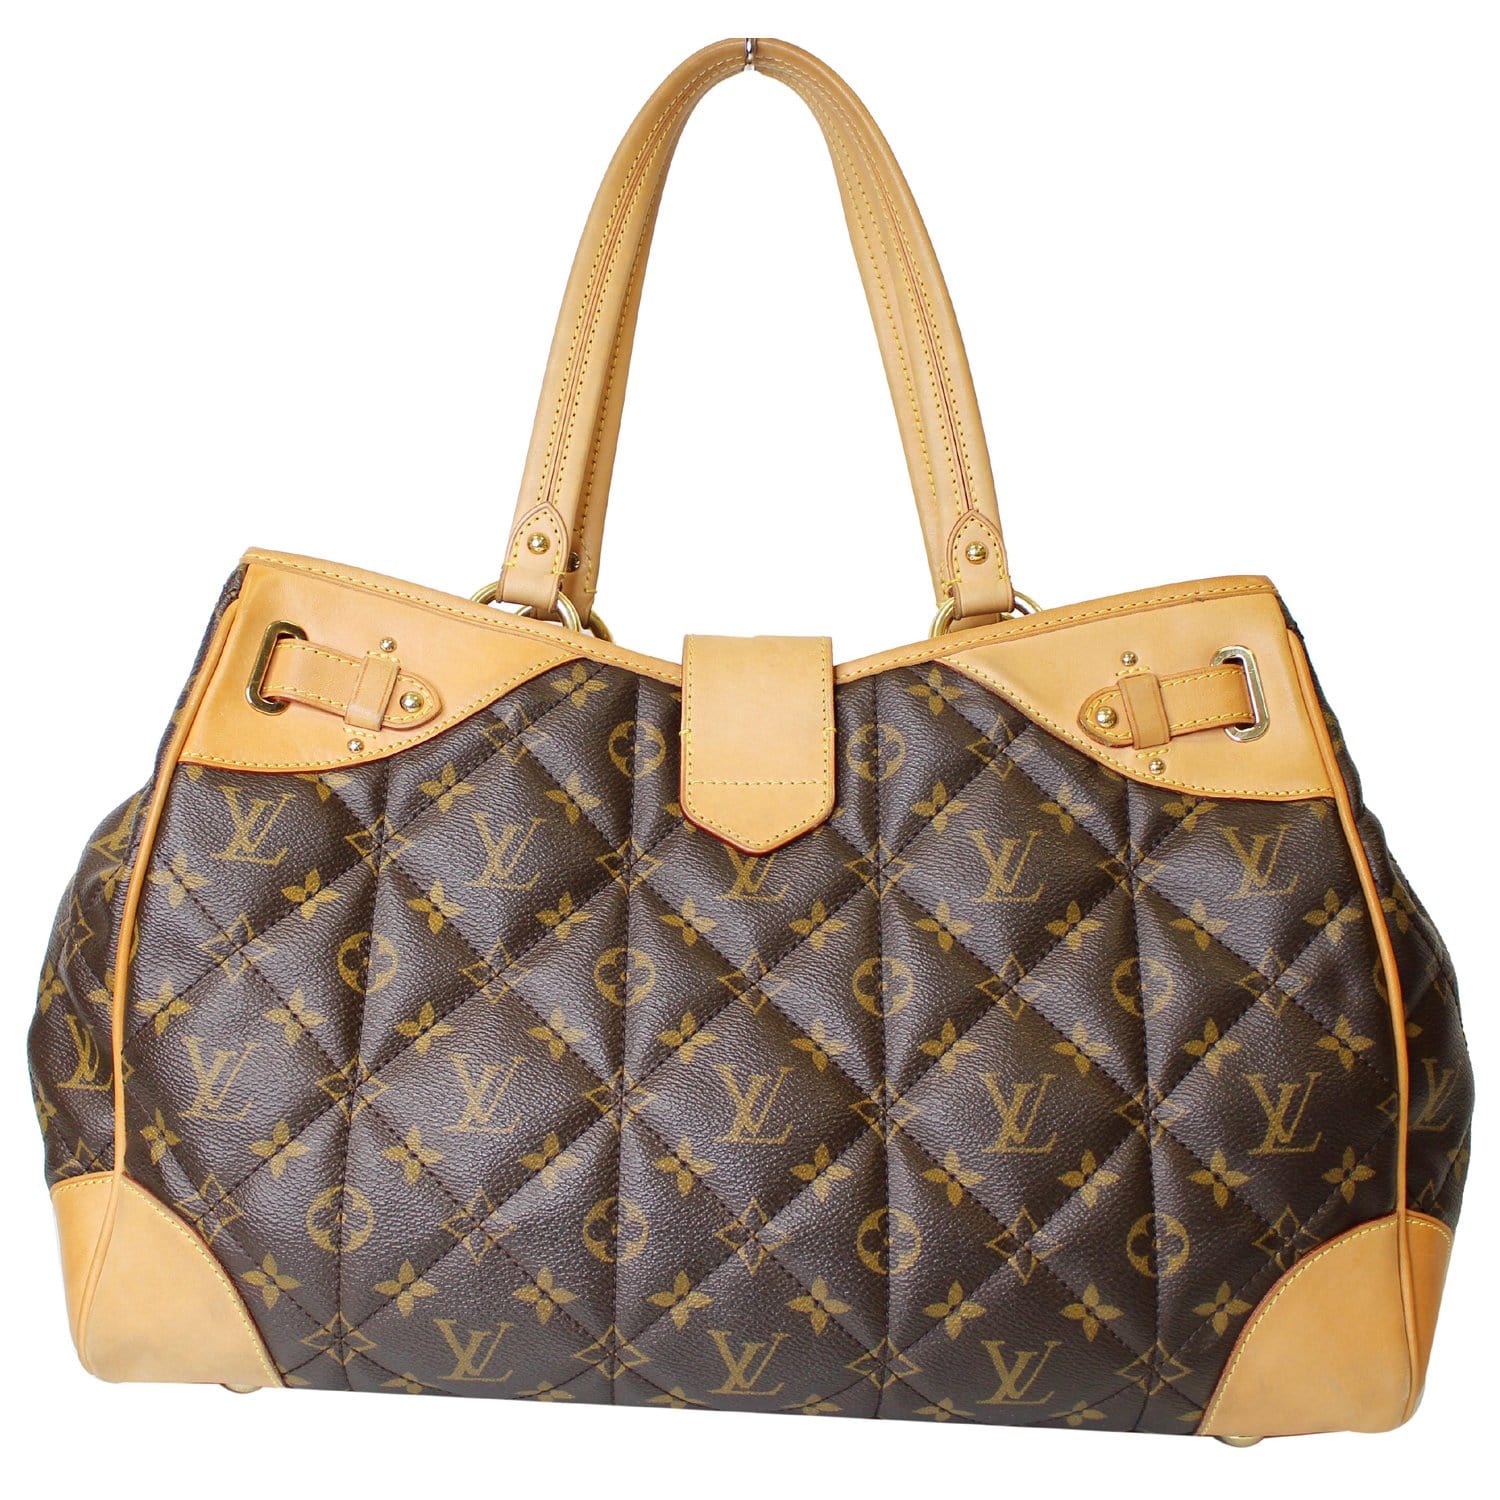 Tradesy Handbags Best Resale Value - Louis Vuitton